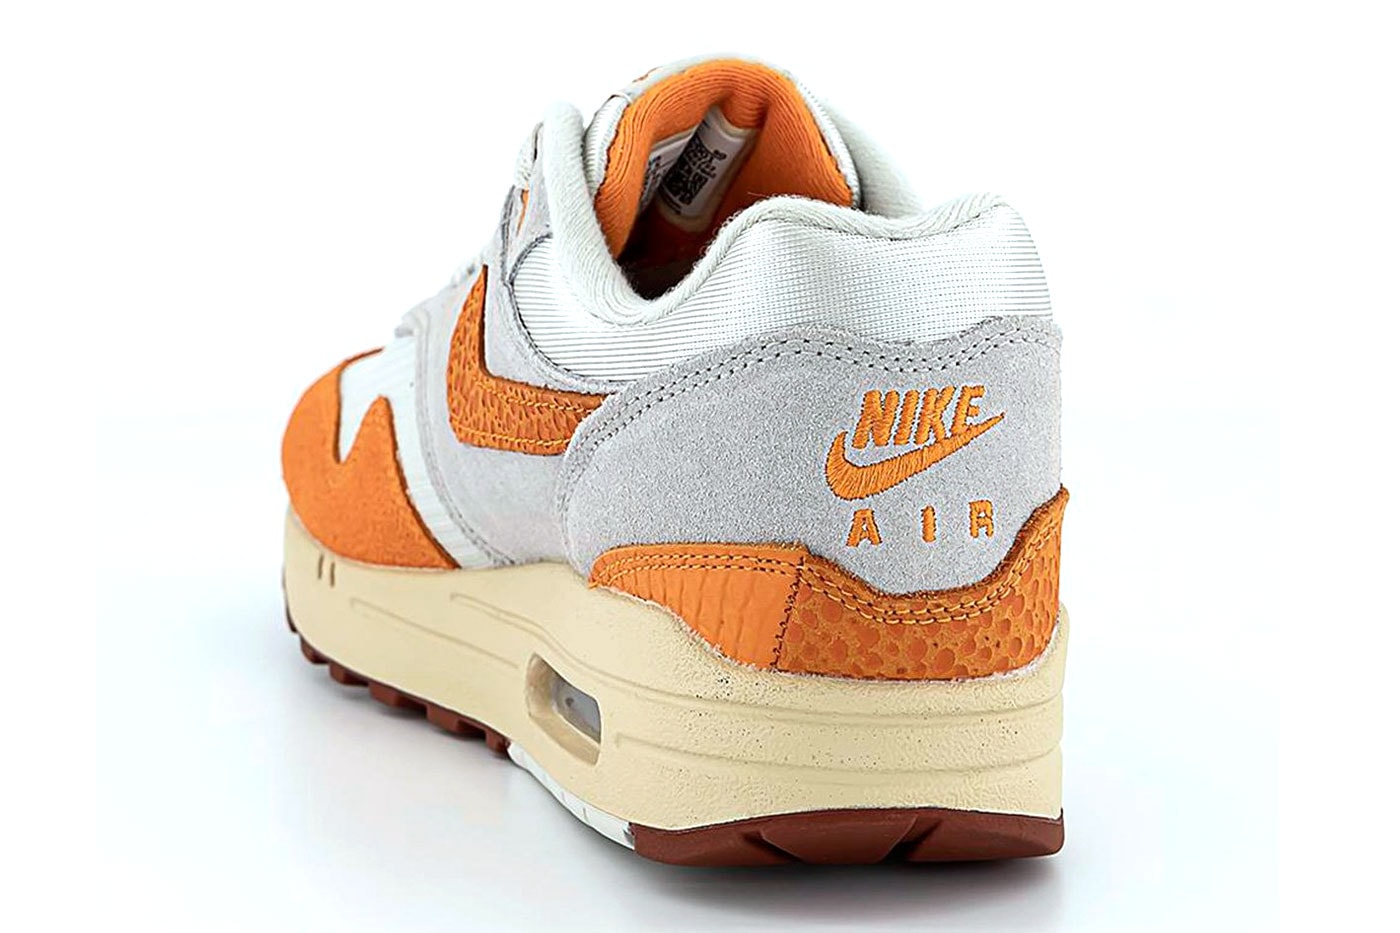 Nike Air Max 1 magma orange neutral grey dz4709 001 sneaker footwear release date info price